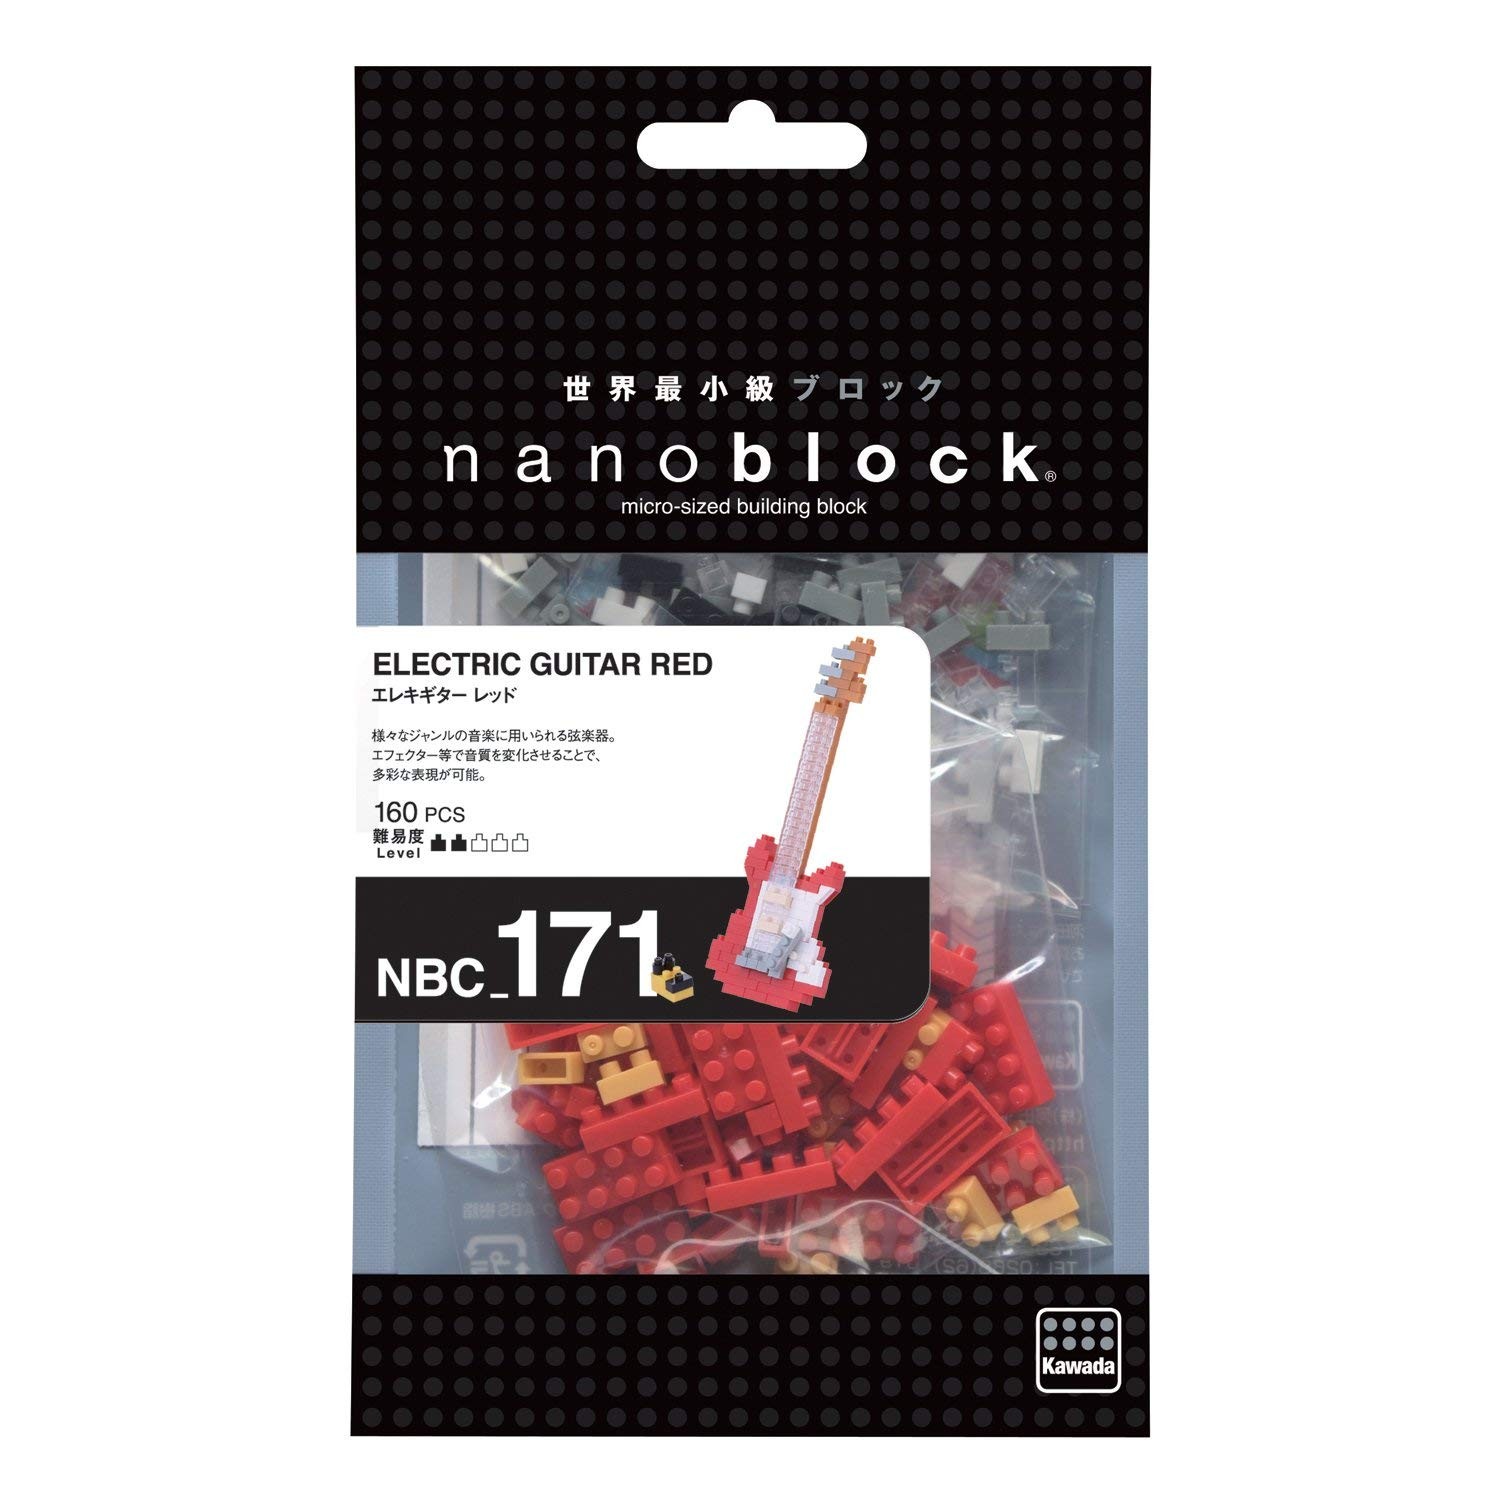 NANOBLOCK Electric Guitar Blue Nano Block Micro-Sized Building Blocks NBC-095 